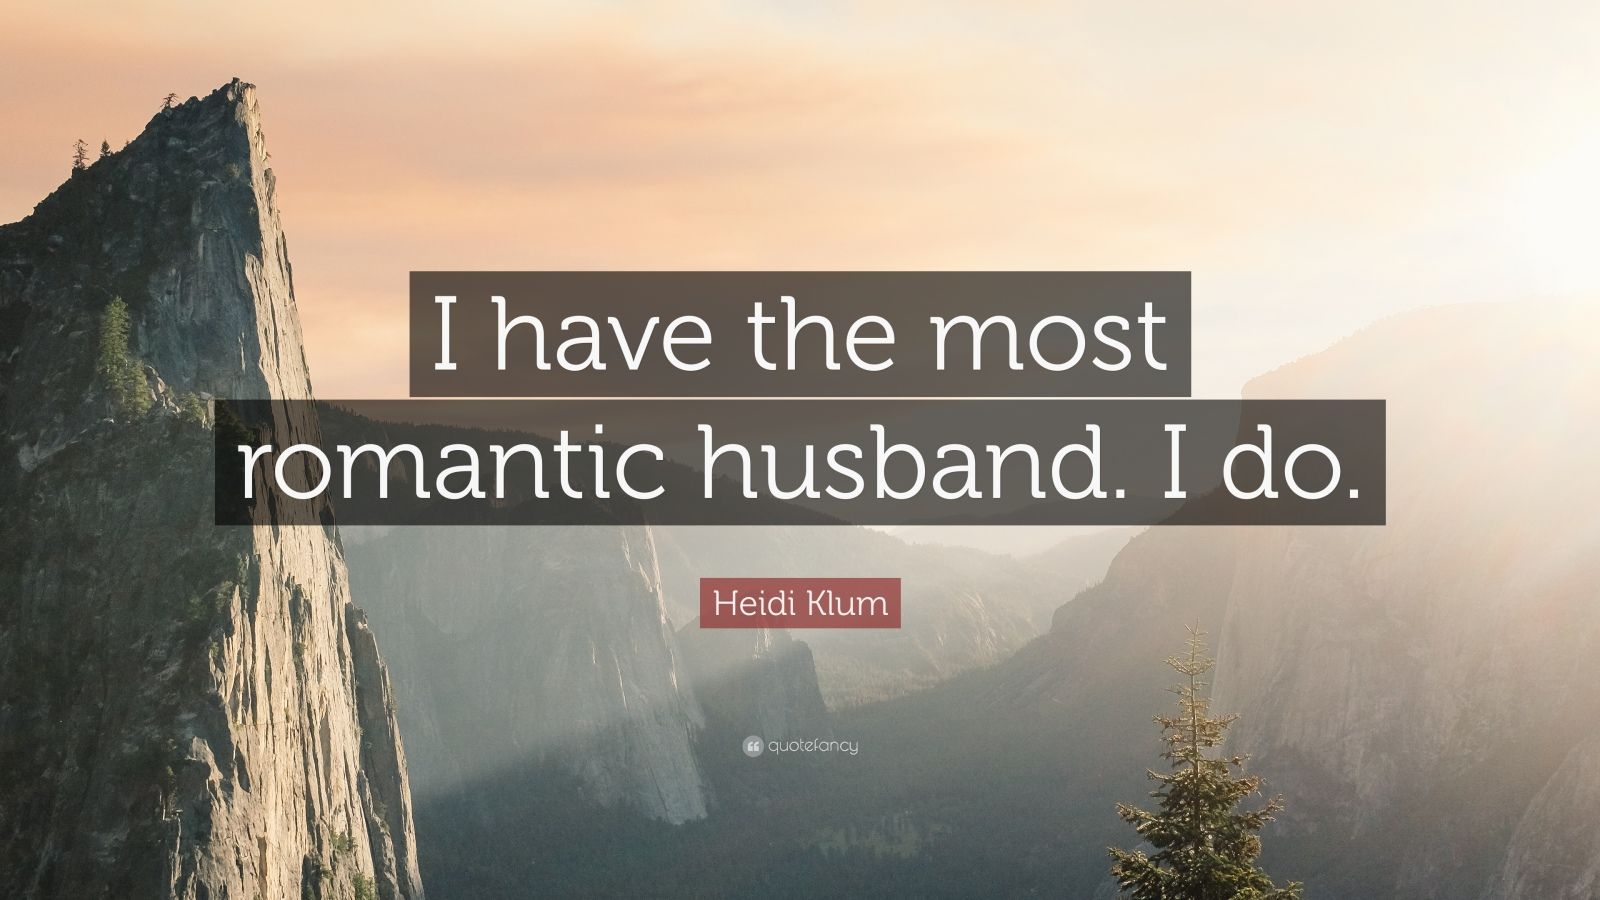 Heidi Klum Quote: "I have the most romantic husband. I do ...